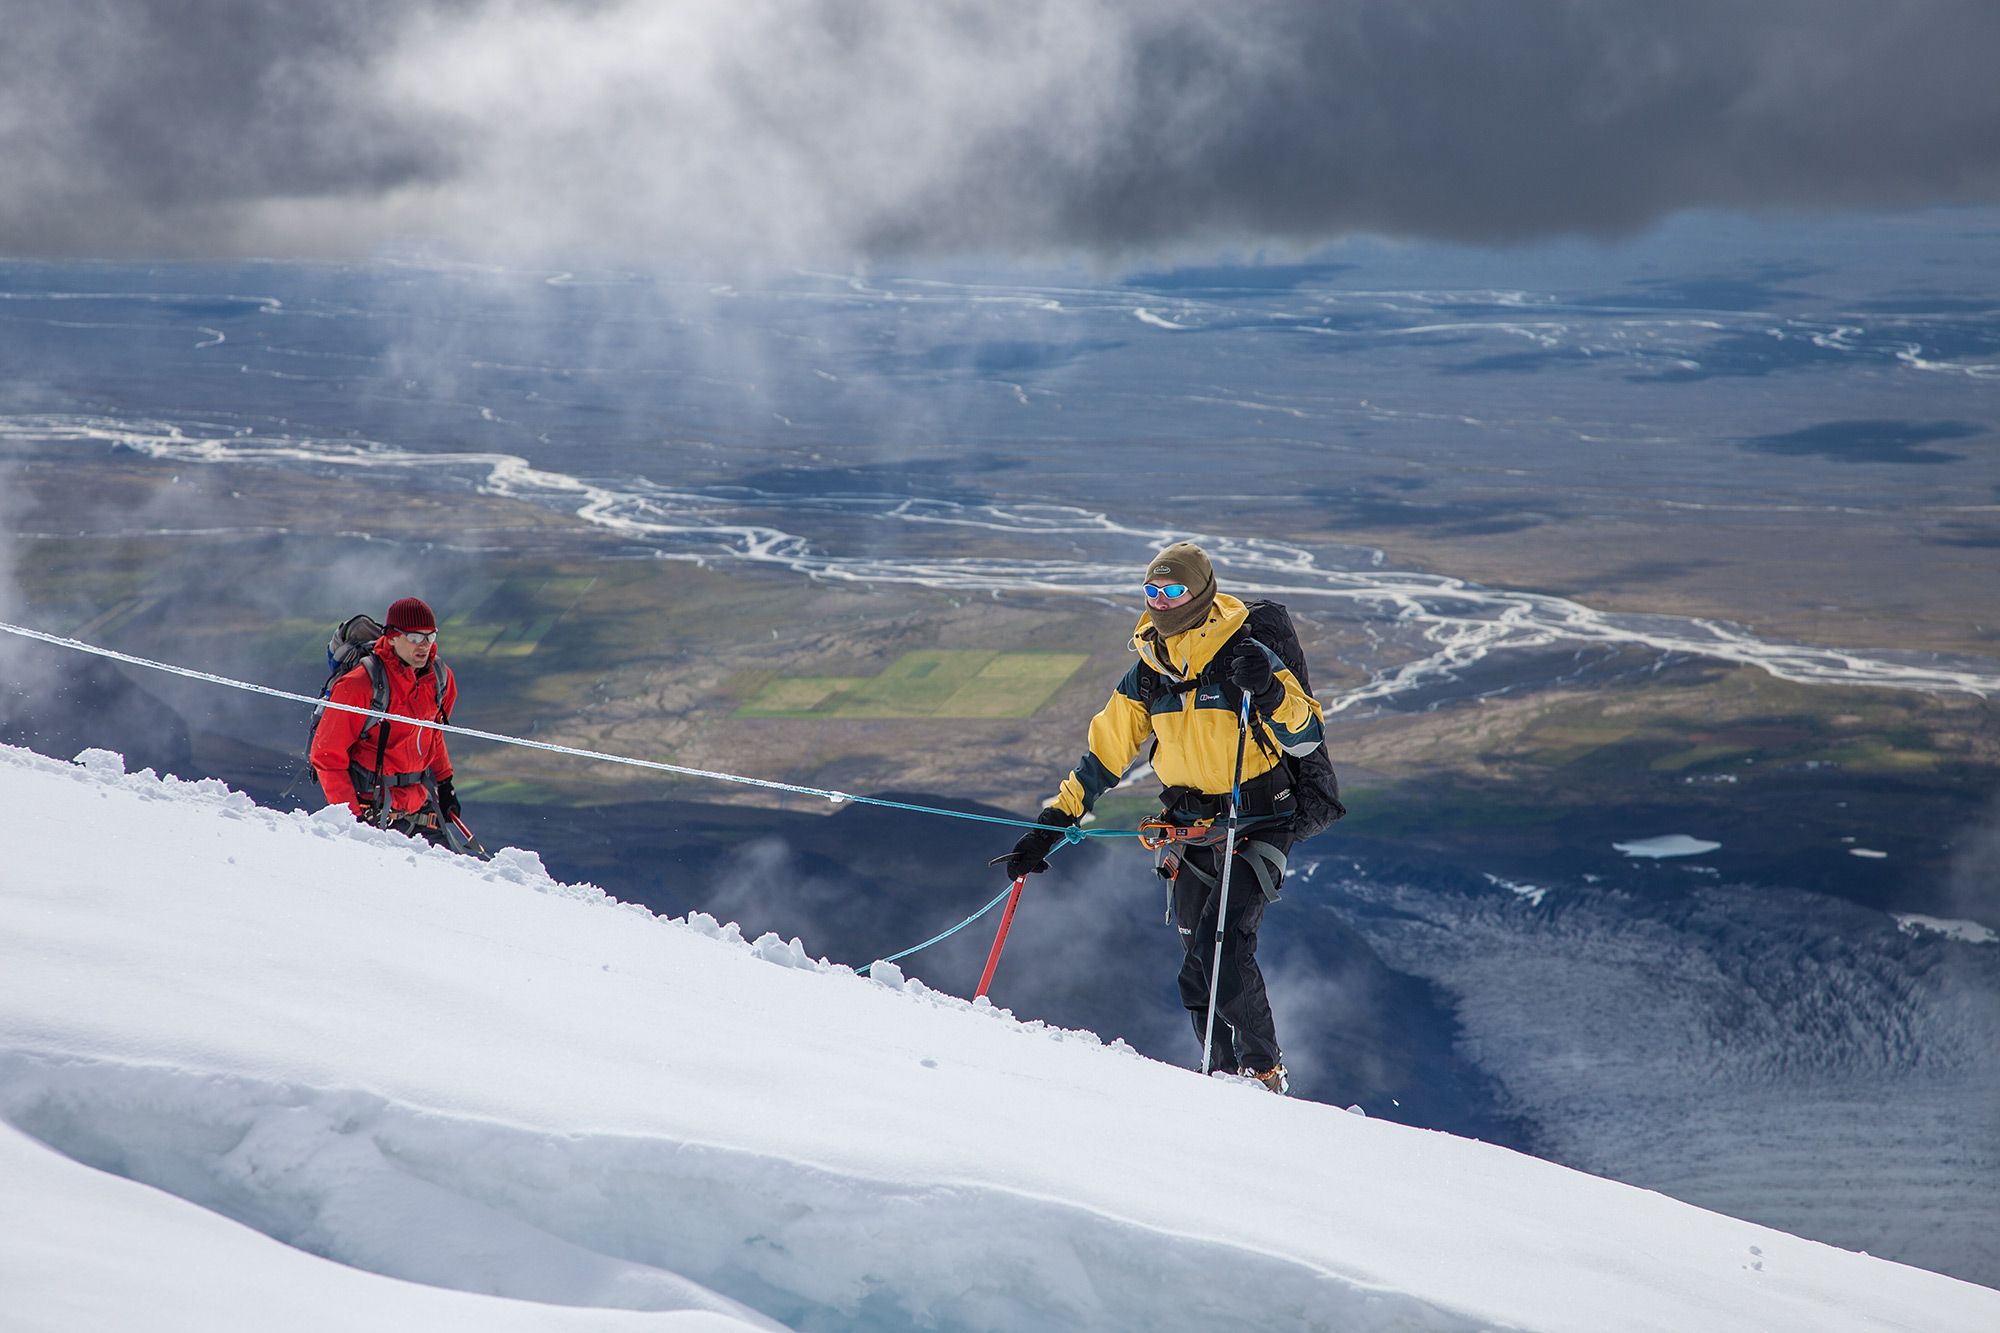 A climber ascending the steep snowy slopes of Hvannadalshnúkur, Iceland's highest mountain.